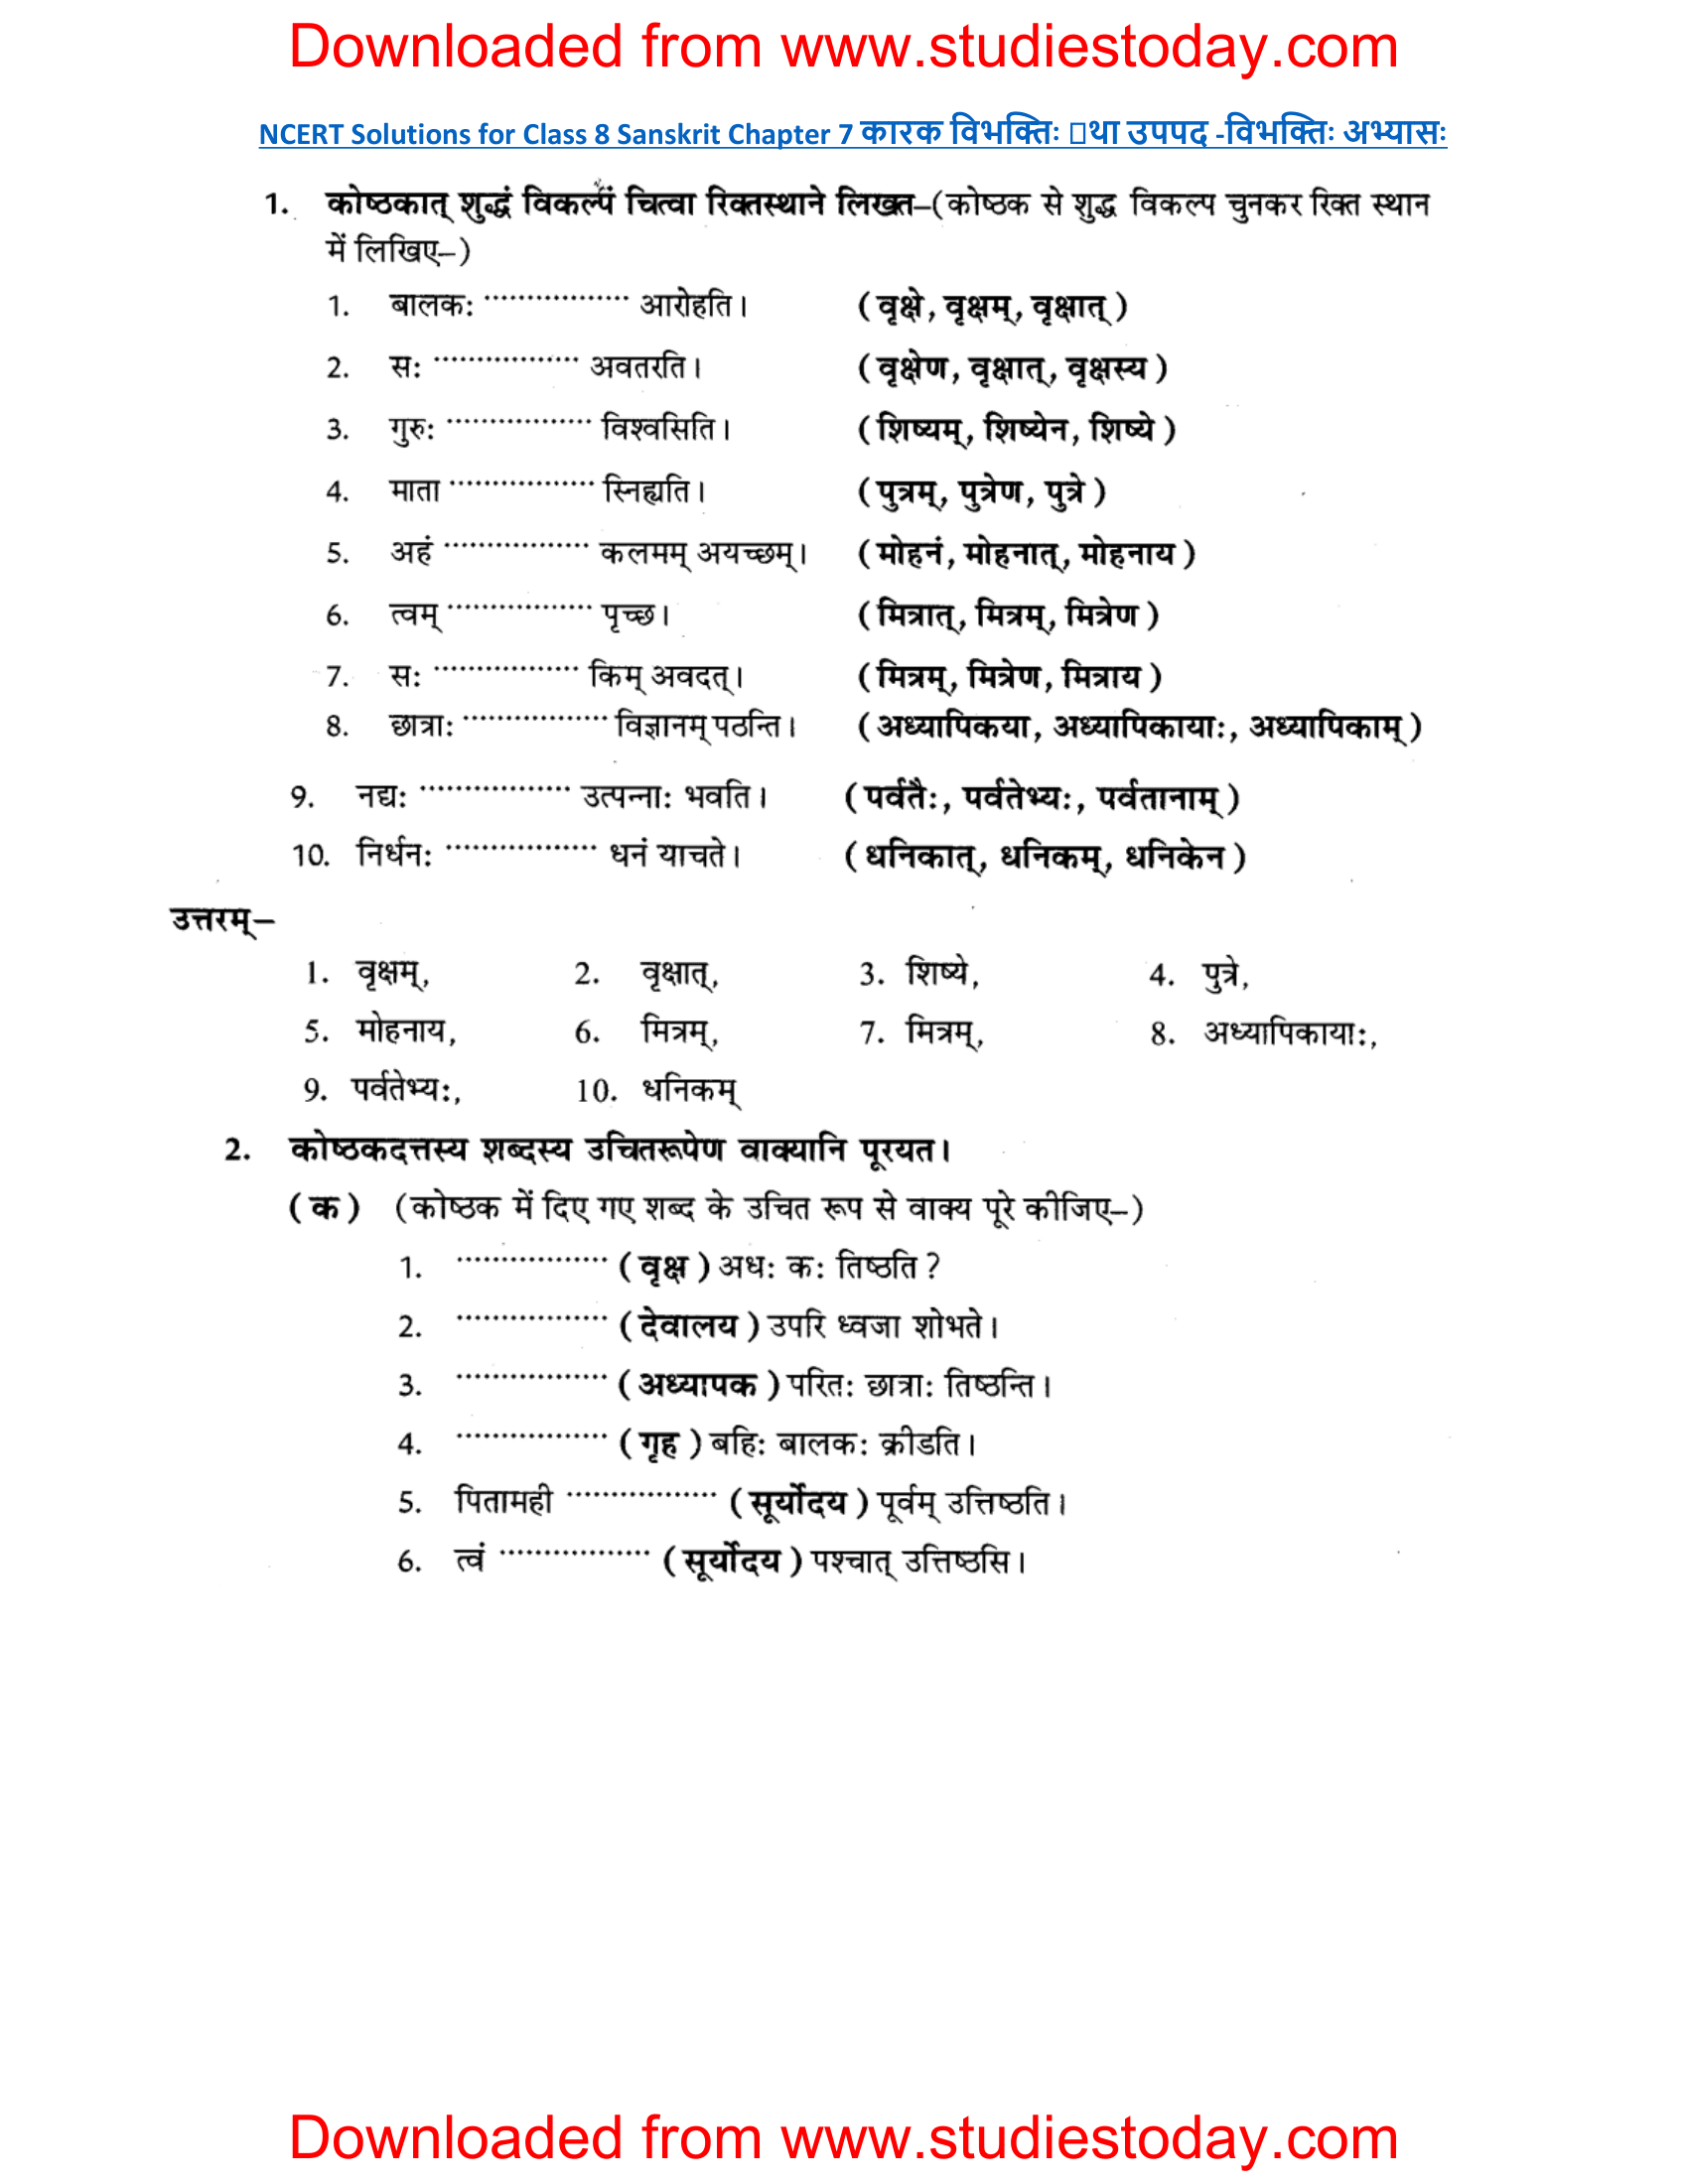 ncert-solutions-class-8-sanskrit-chapter-7-karak-vibhakti-tatha-uppad-vibhakti-1